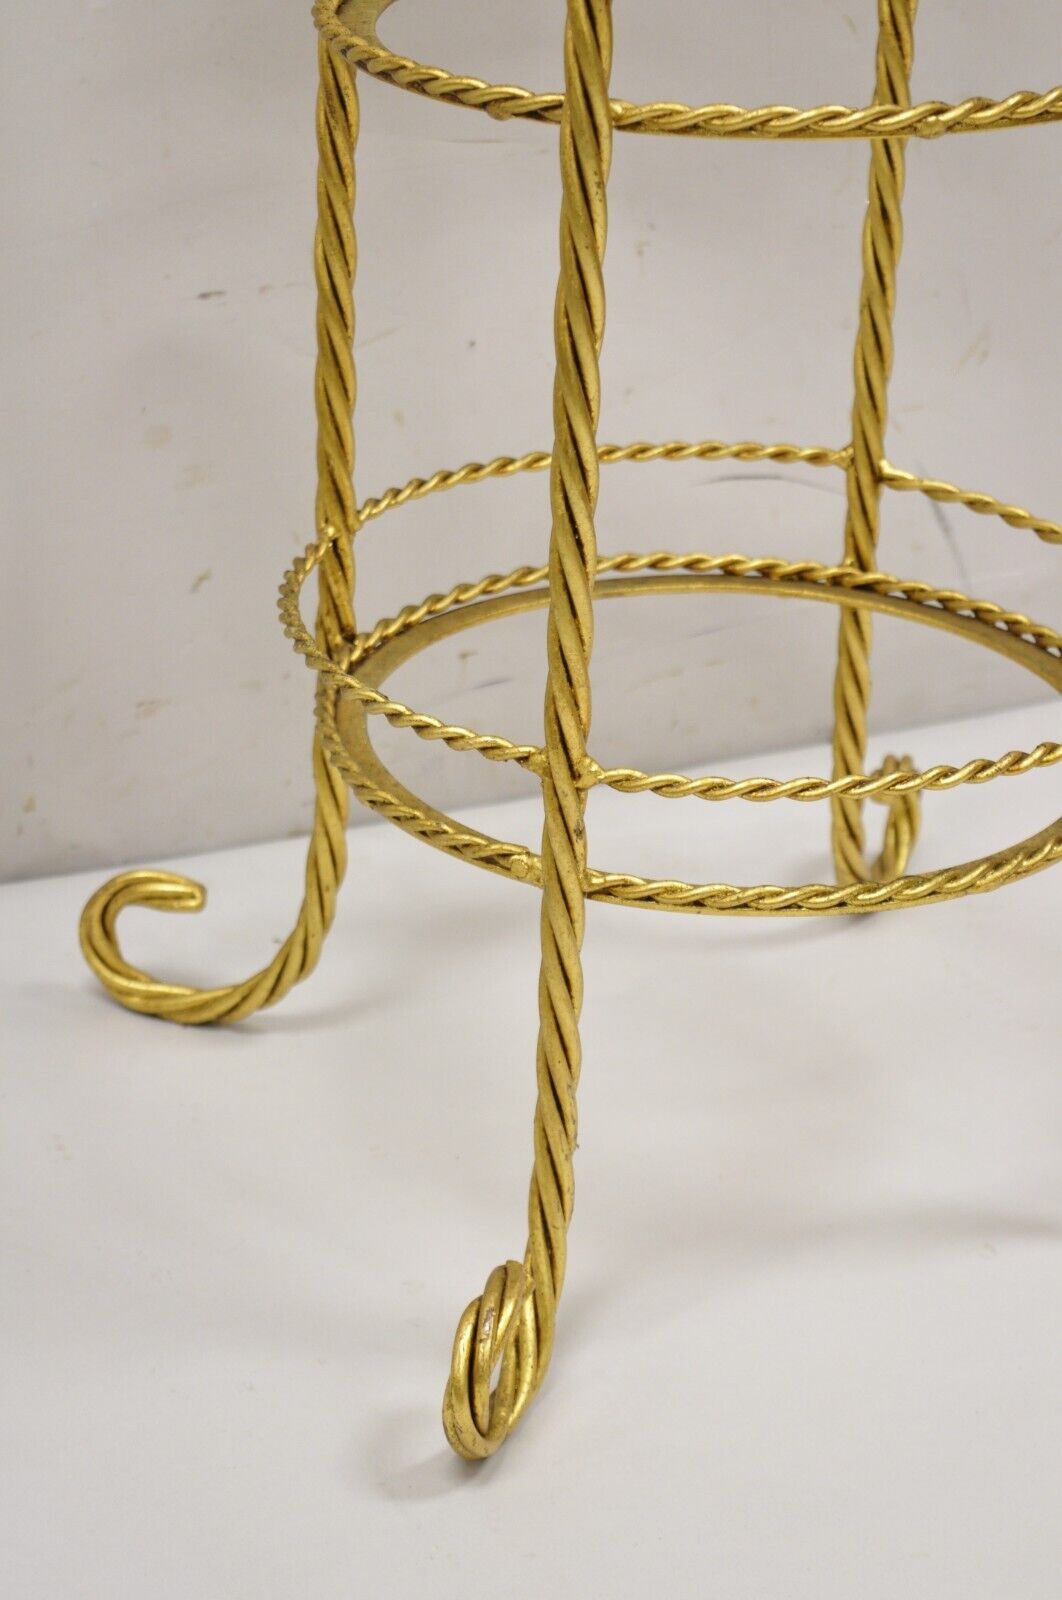 Italian Hollywood Regency 3 Tier Gold Iron Rope Tassel Stand Side Table - Single